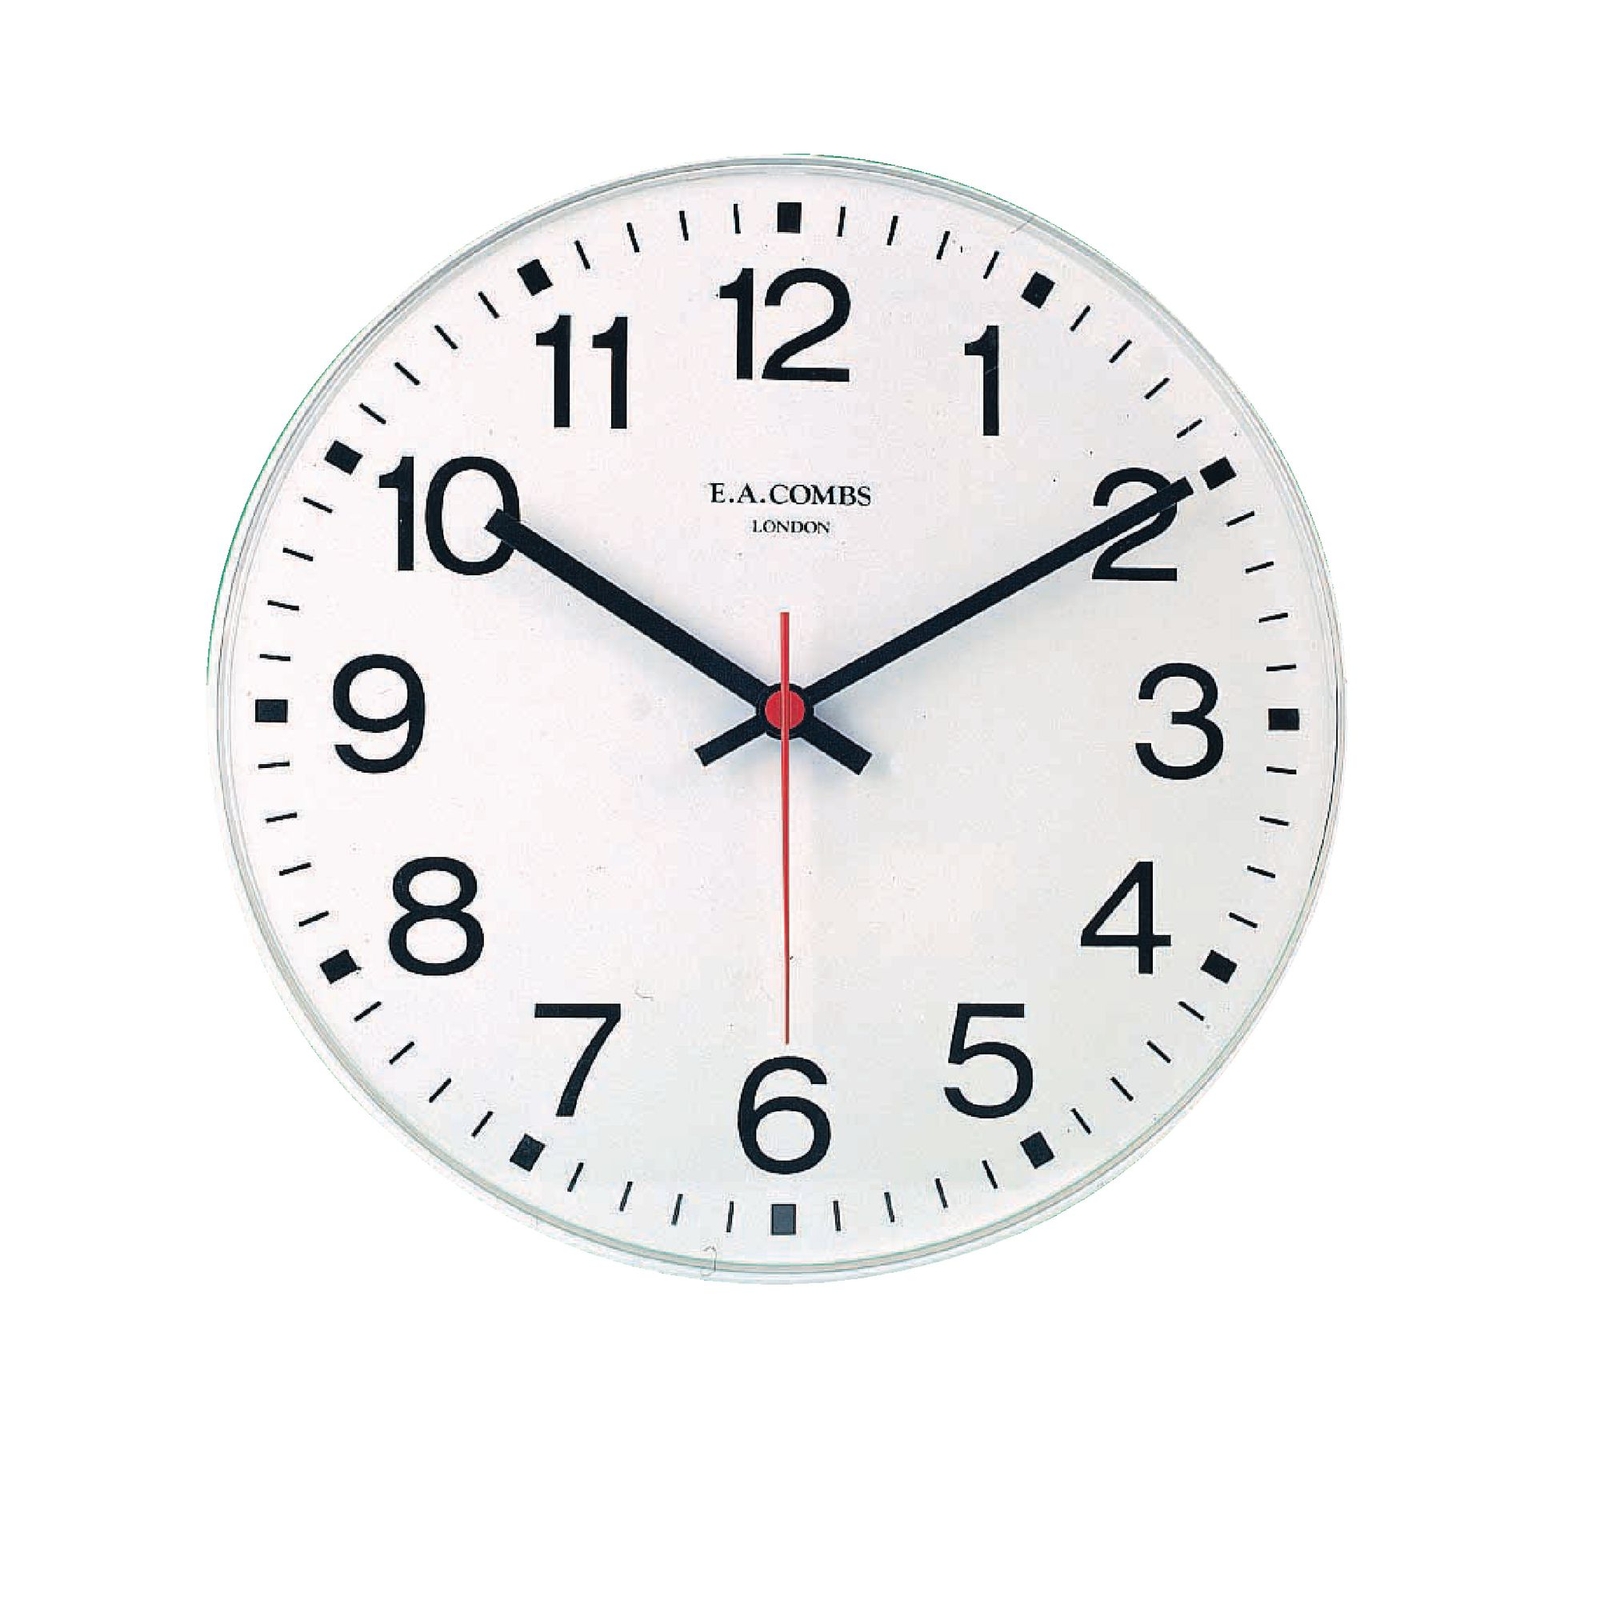 Combs 305mm Wall Clock - 6200RC